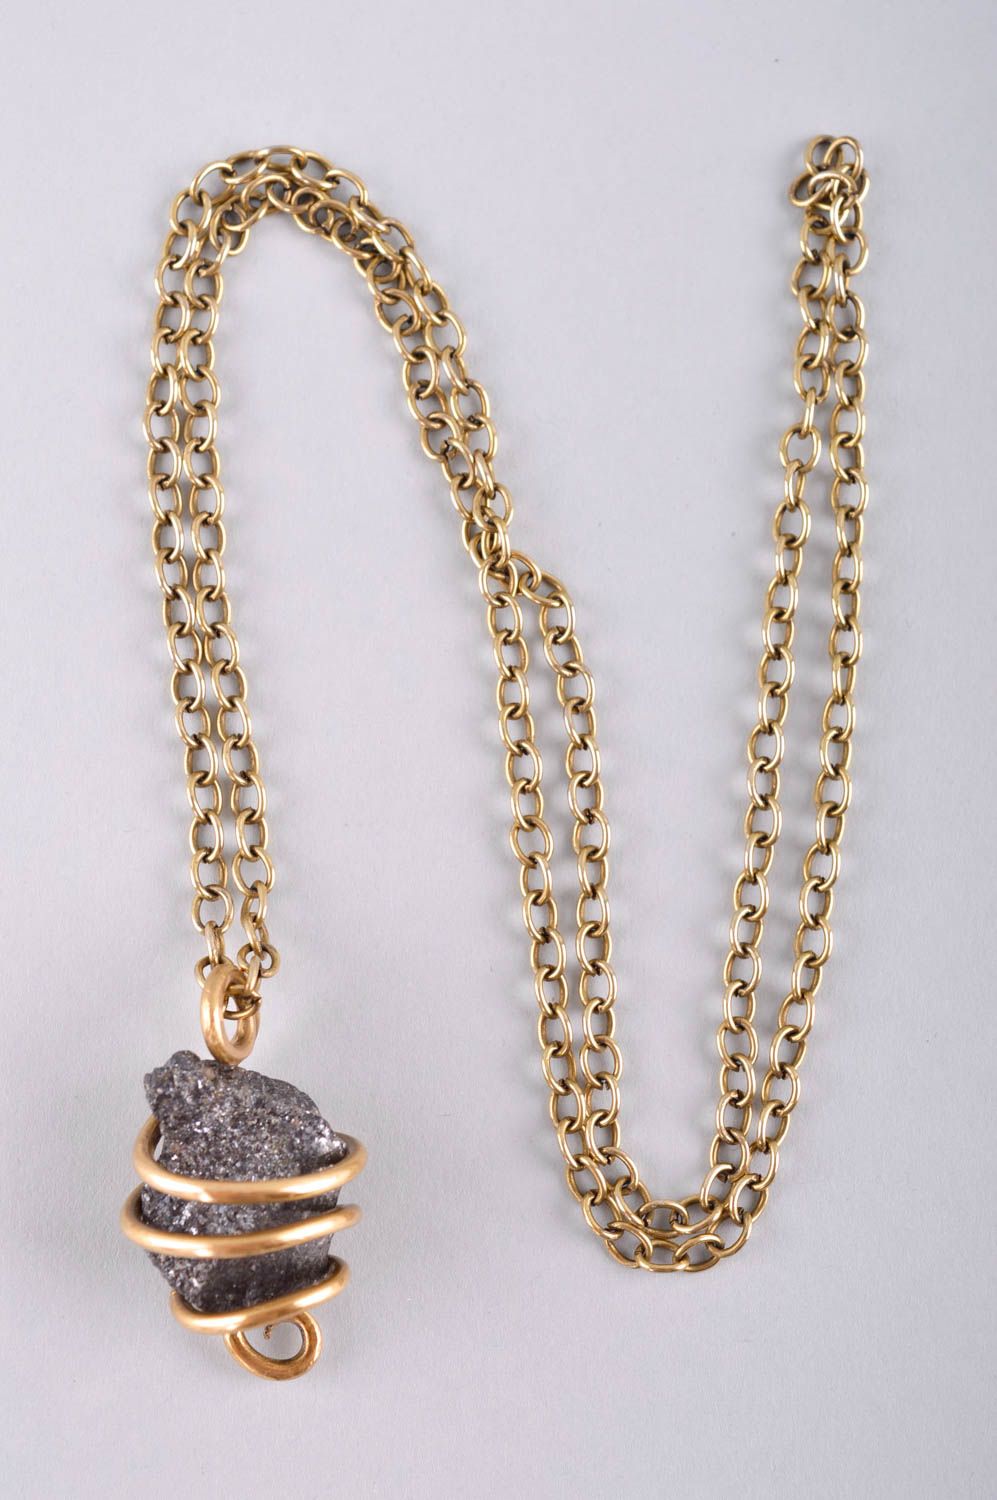 Handmade pendant unusual accessory metal jewelry gift ideas brass pendant photo 5